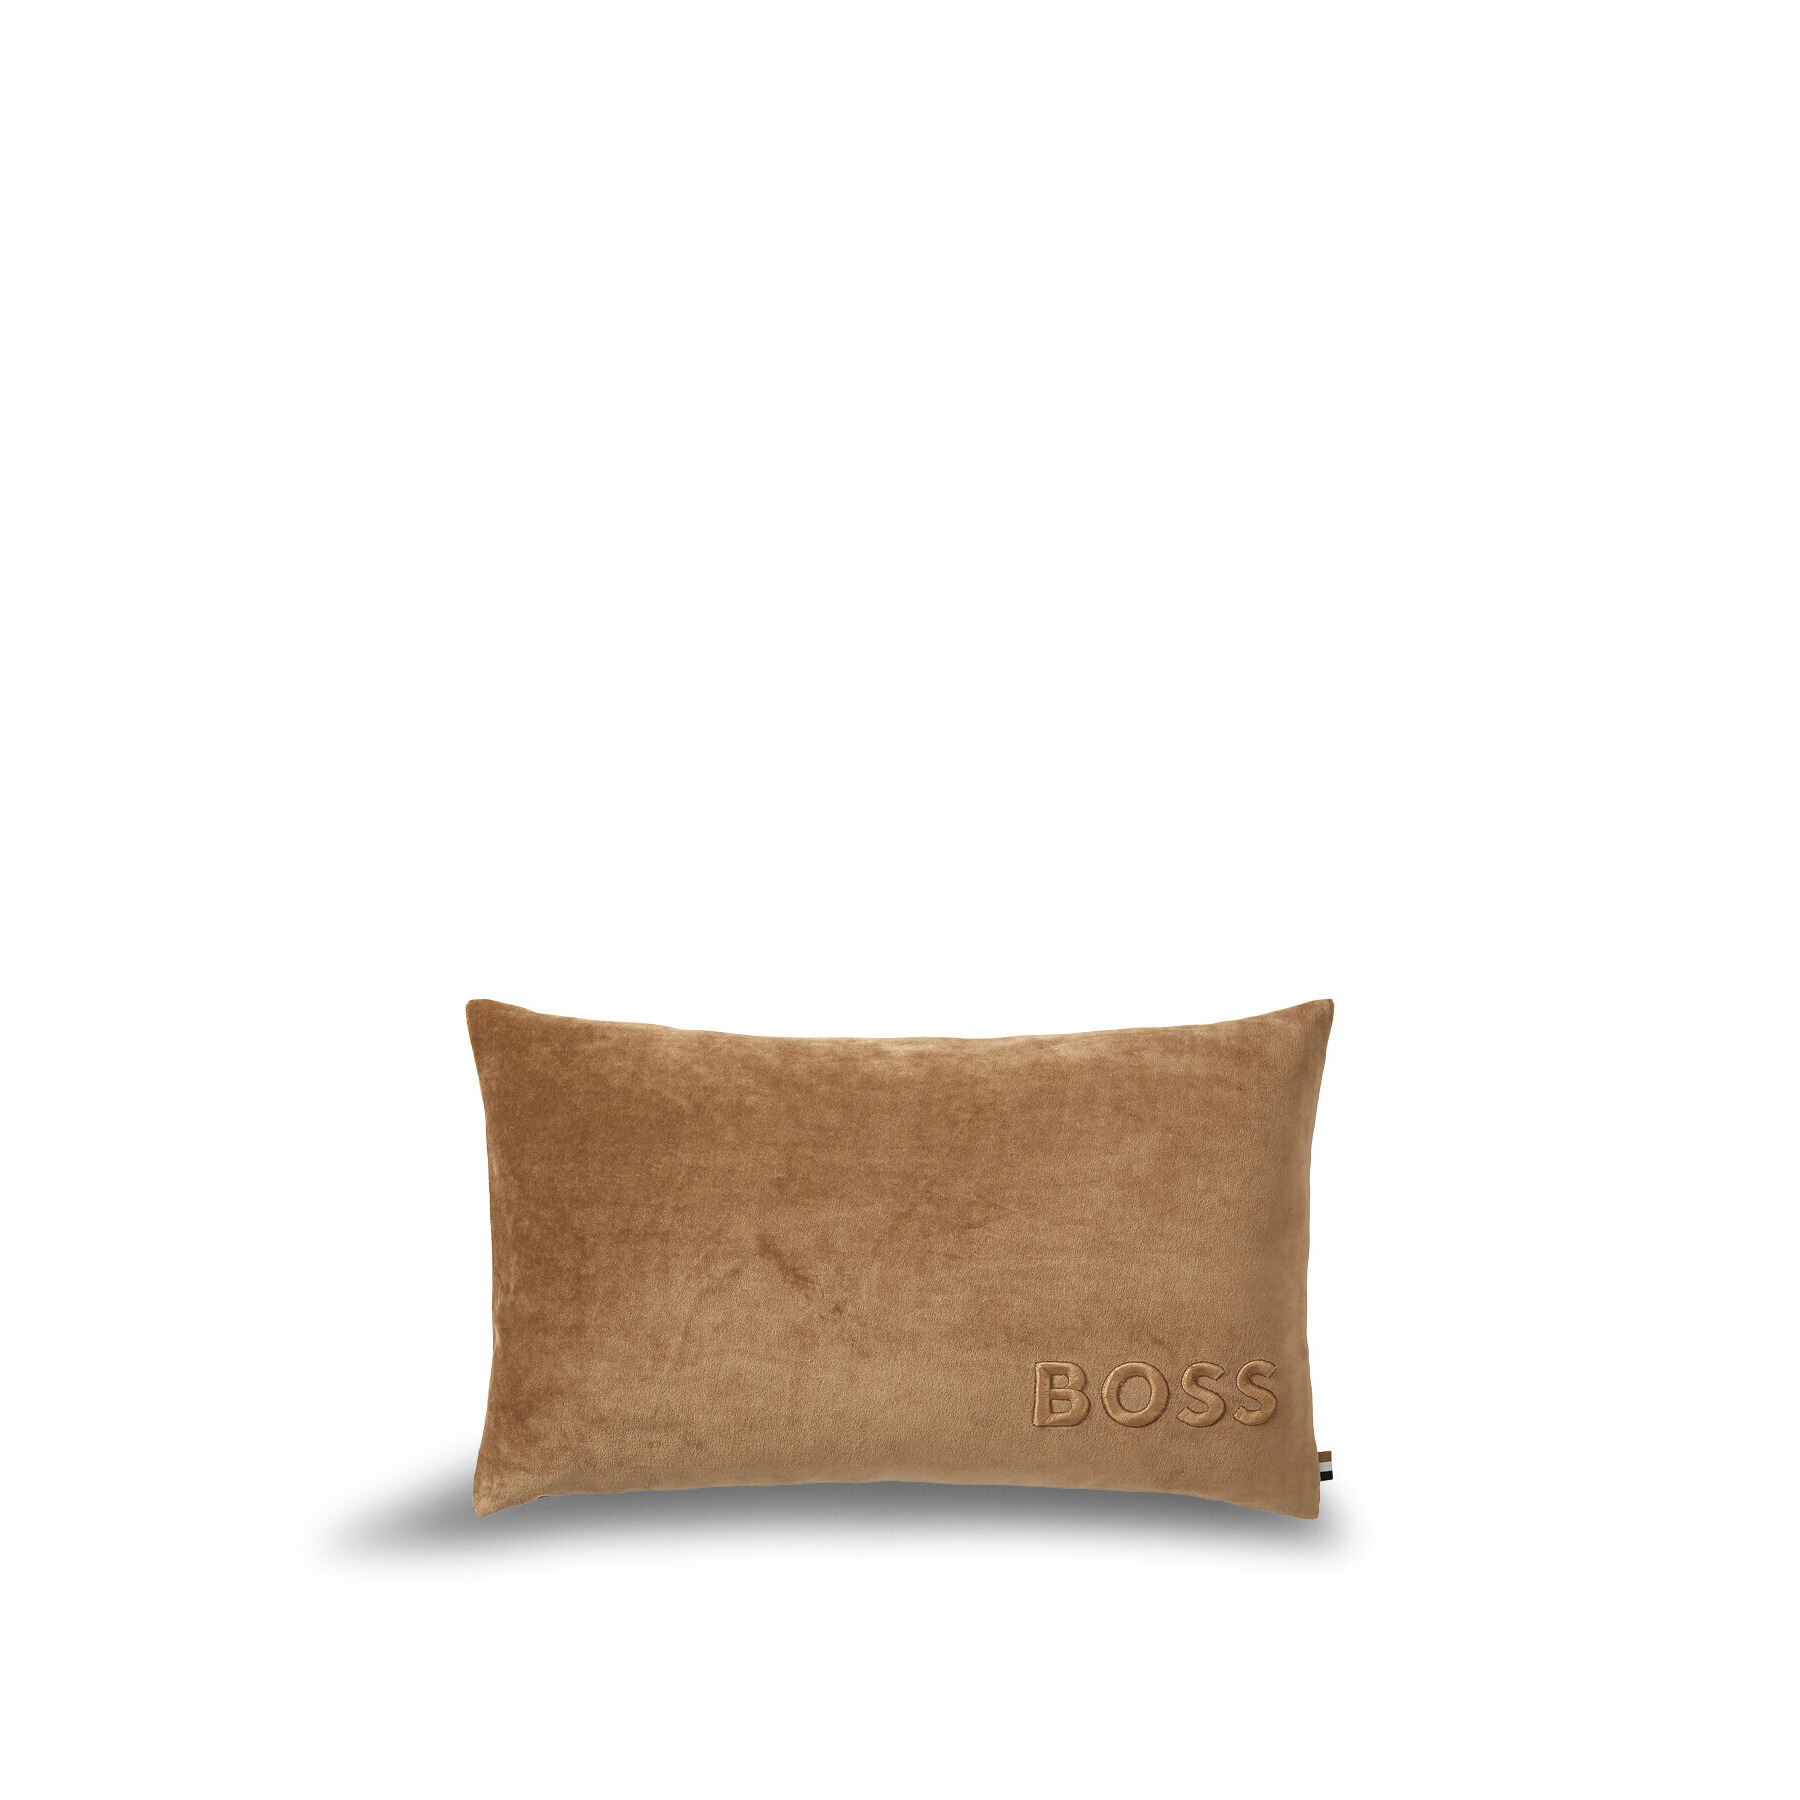 BOSS Home Bold Logo Cushion Cover - Size 33x57cm Tan - image 1